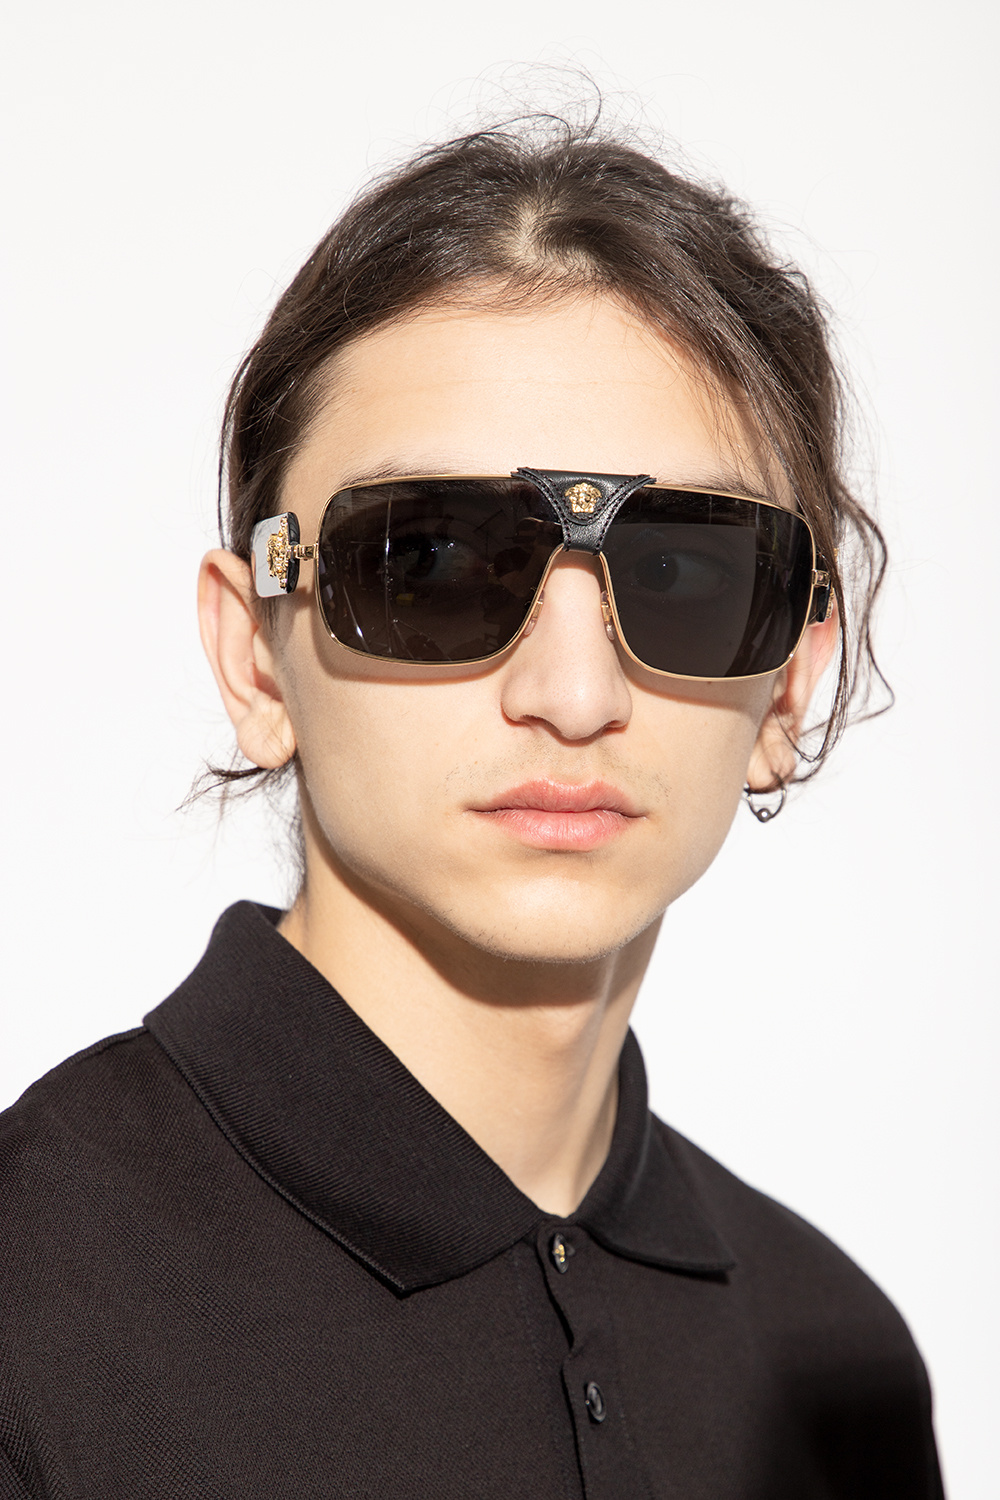 Versace Vava sunglasses MOSCOT for Women